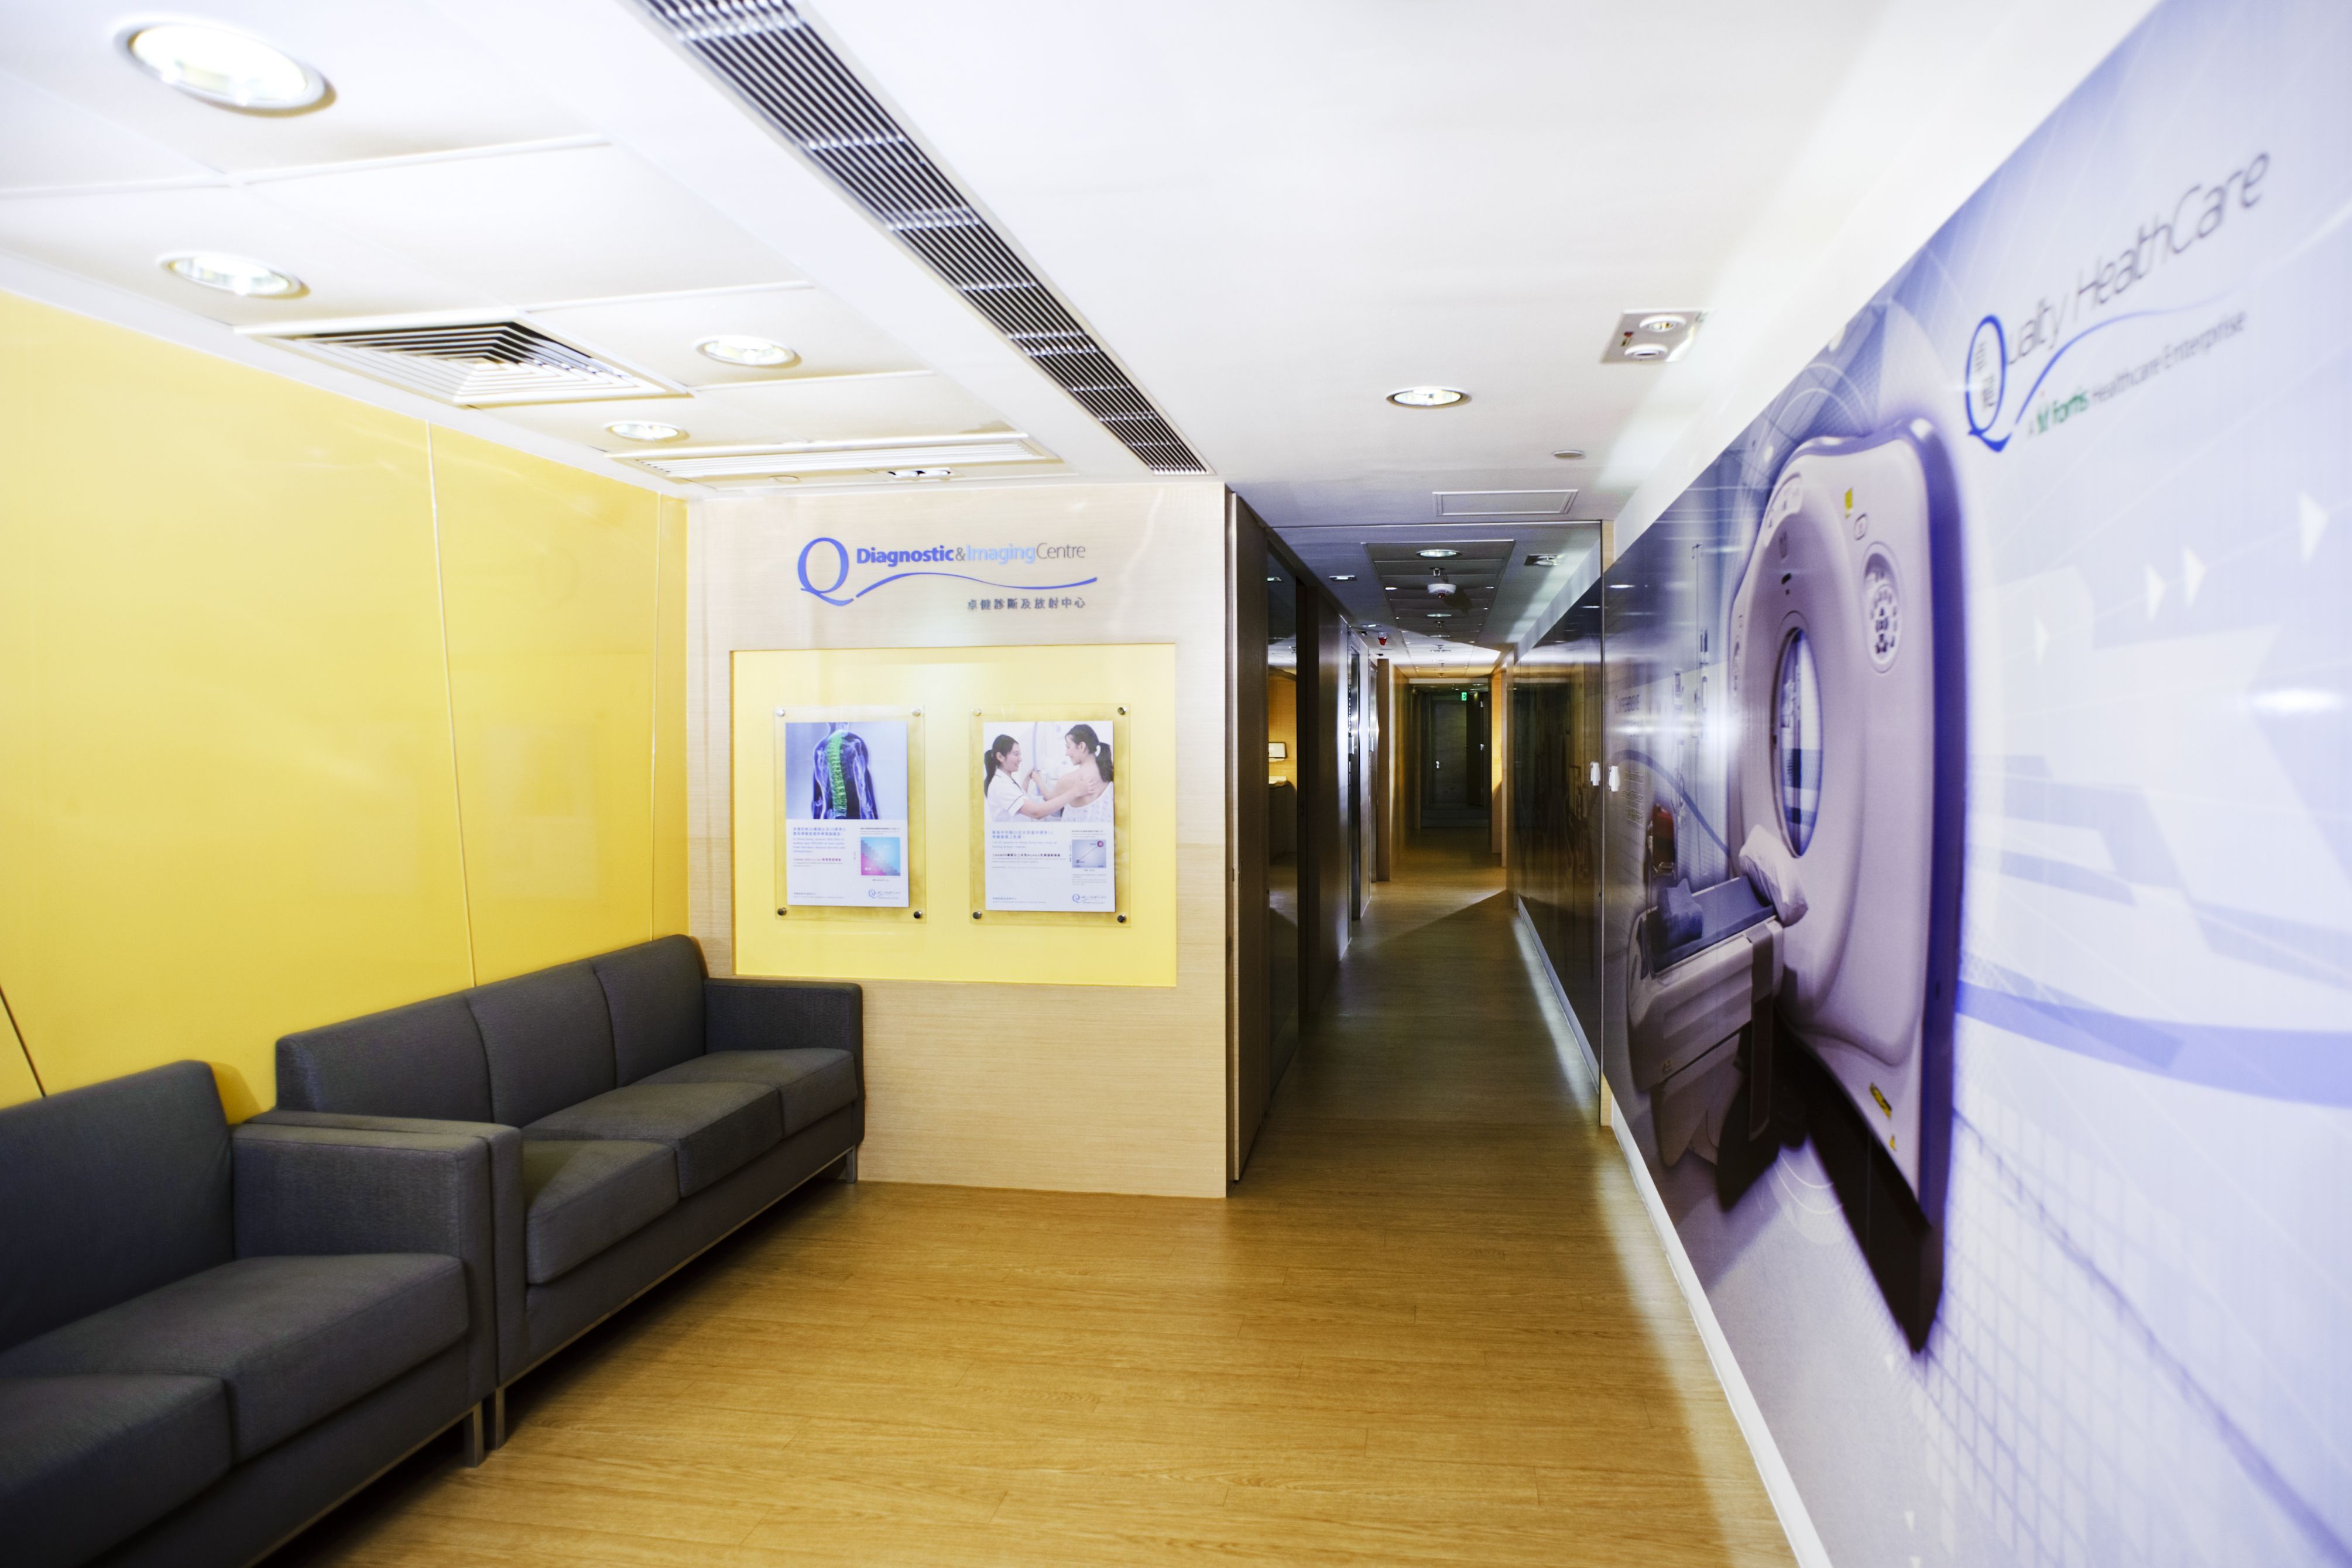 Quality HealthCare Diagnostic & Imaging Centre waiting area